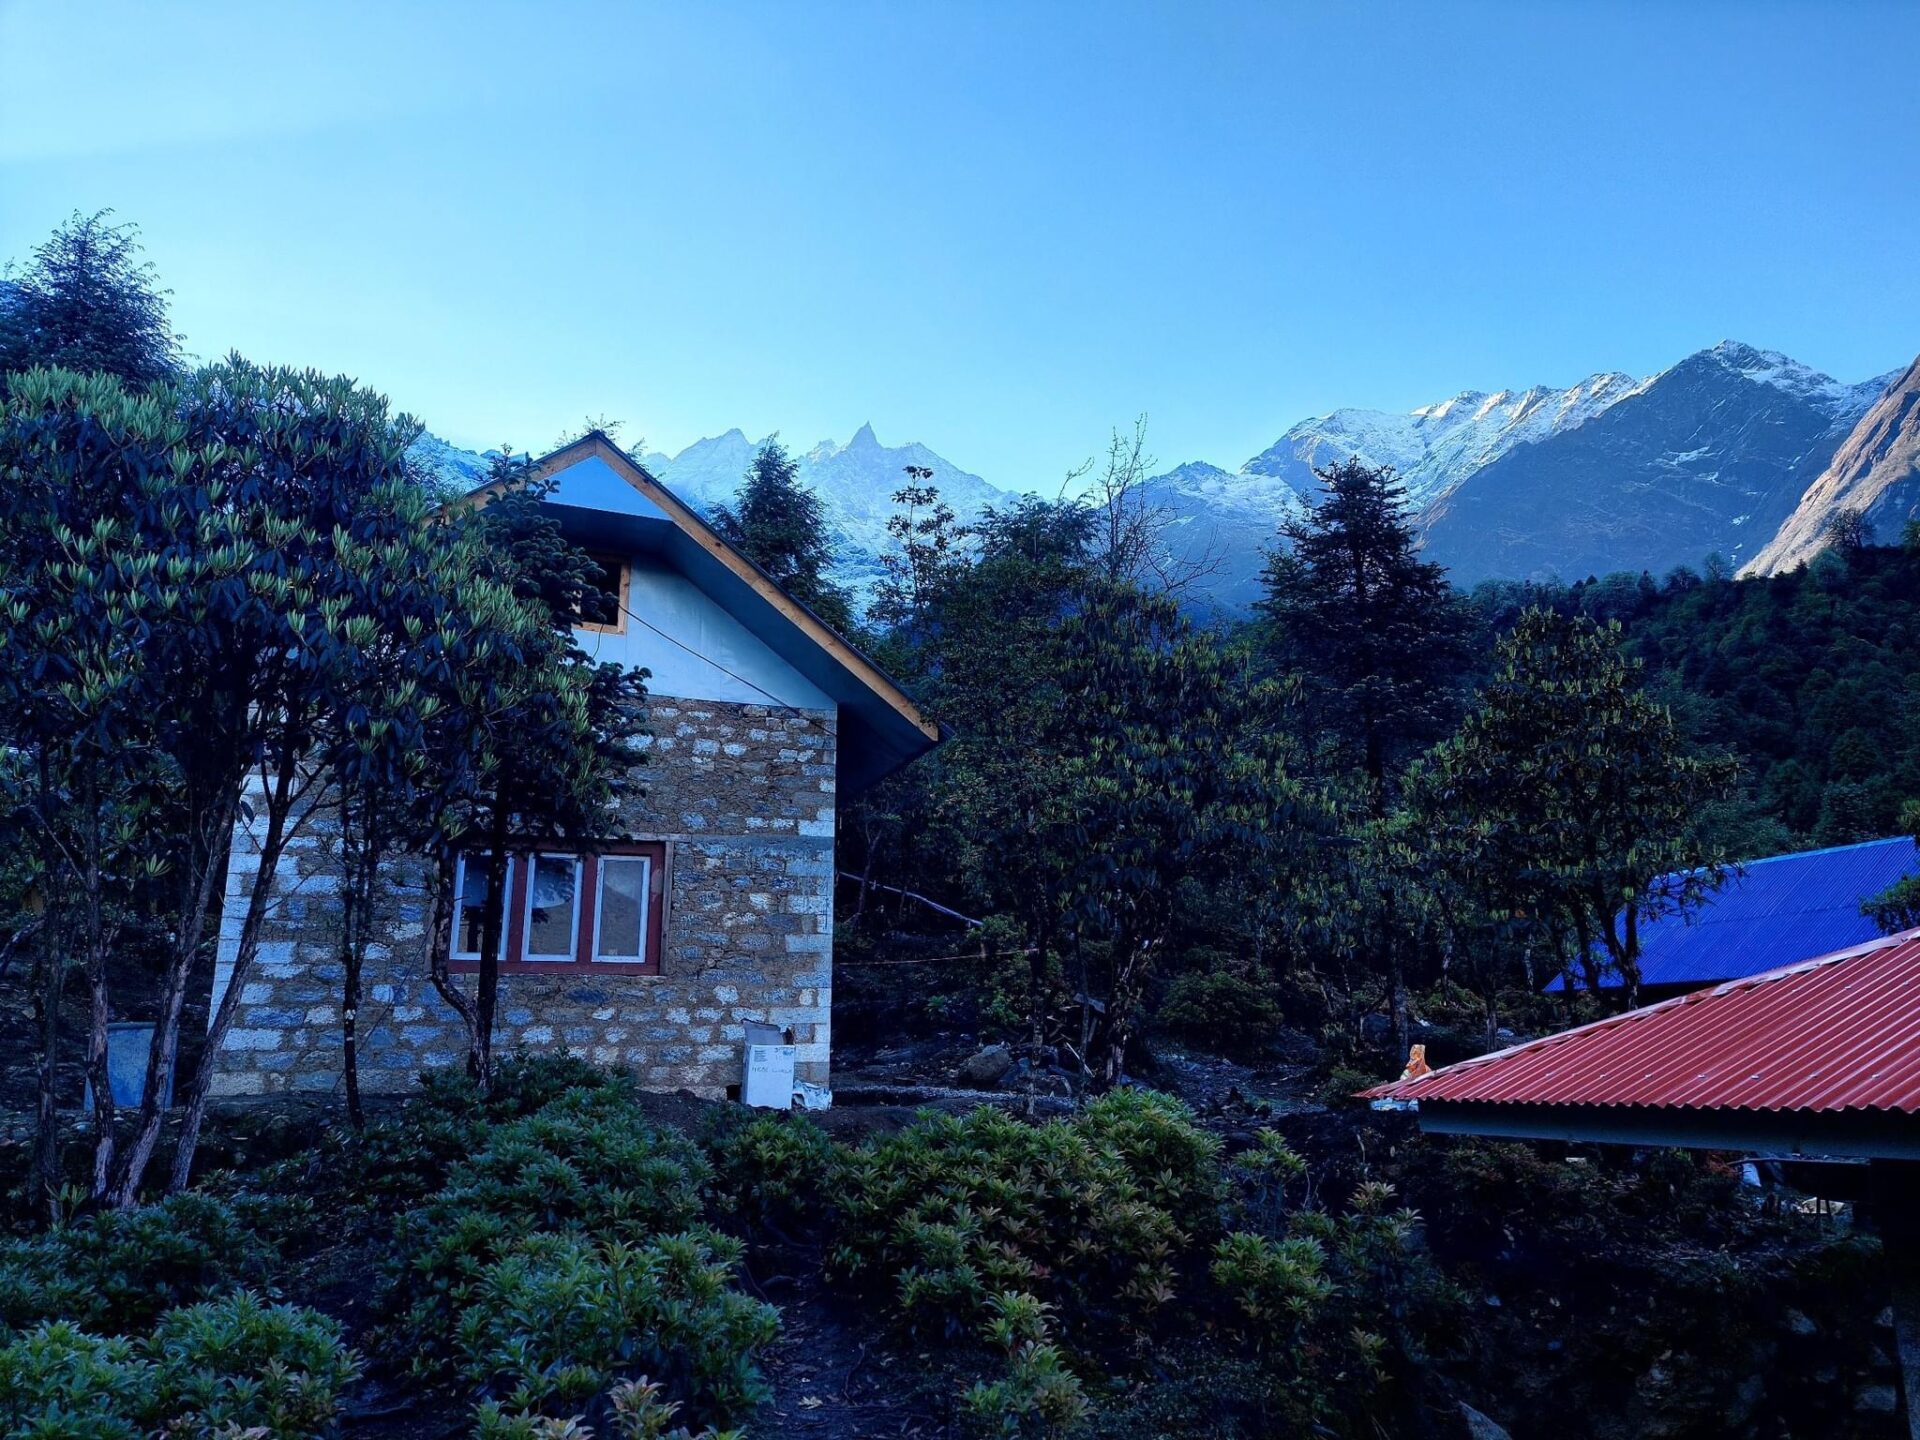 Dhamma Sagar Vipassana & Everest Base Camp: A Meditative Trek